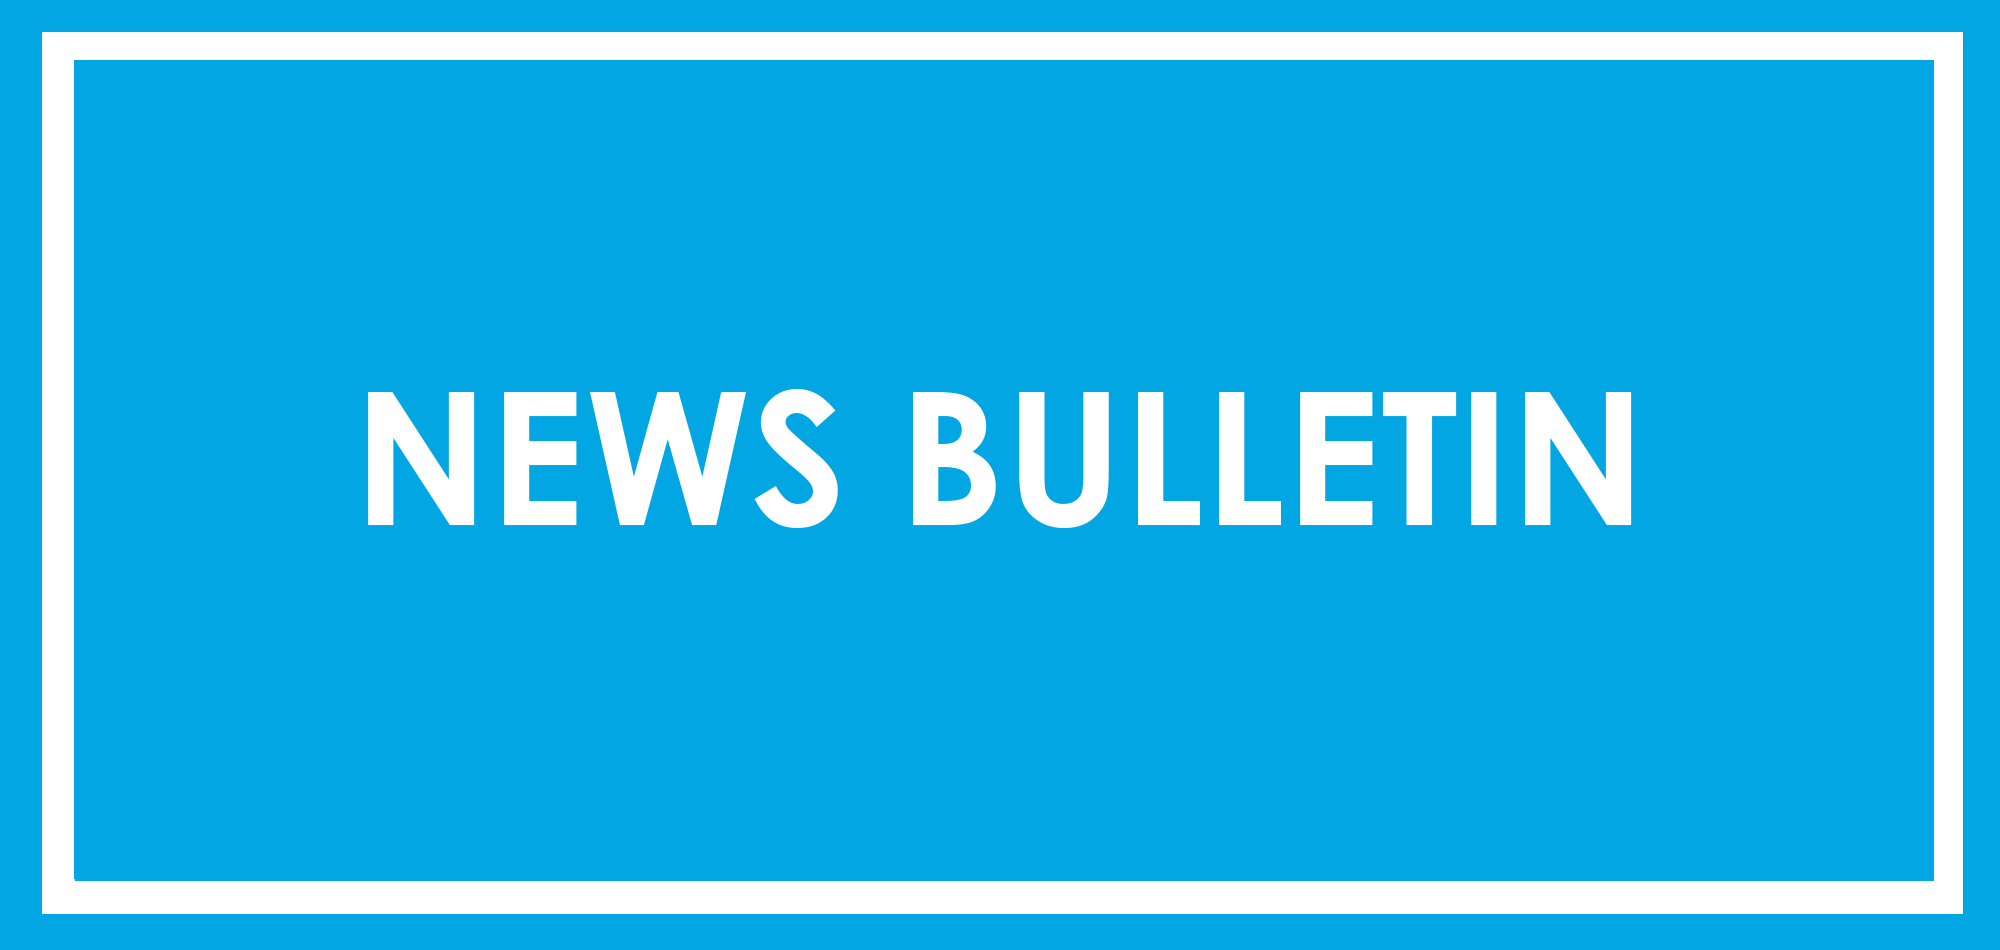 News Bulletin - 16.11.21